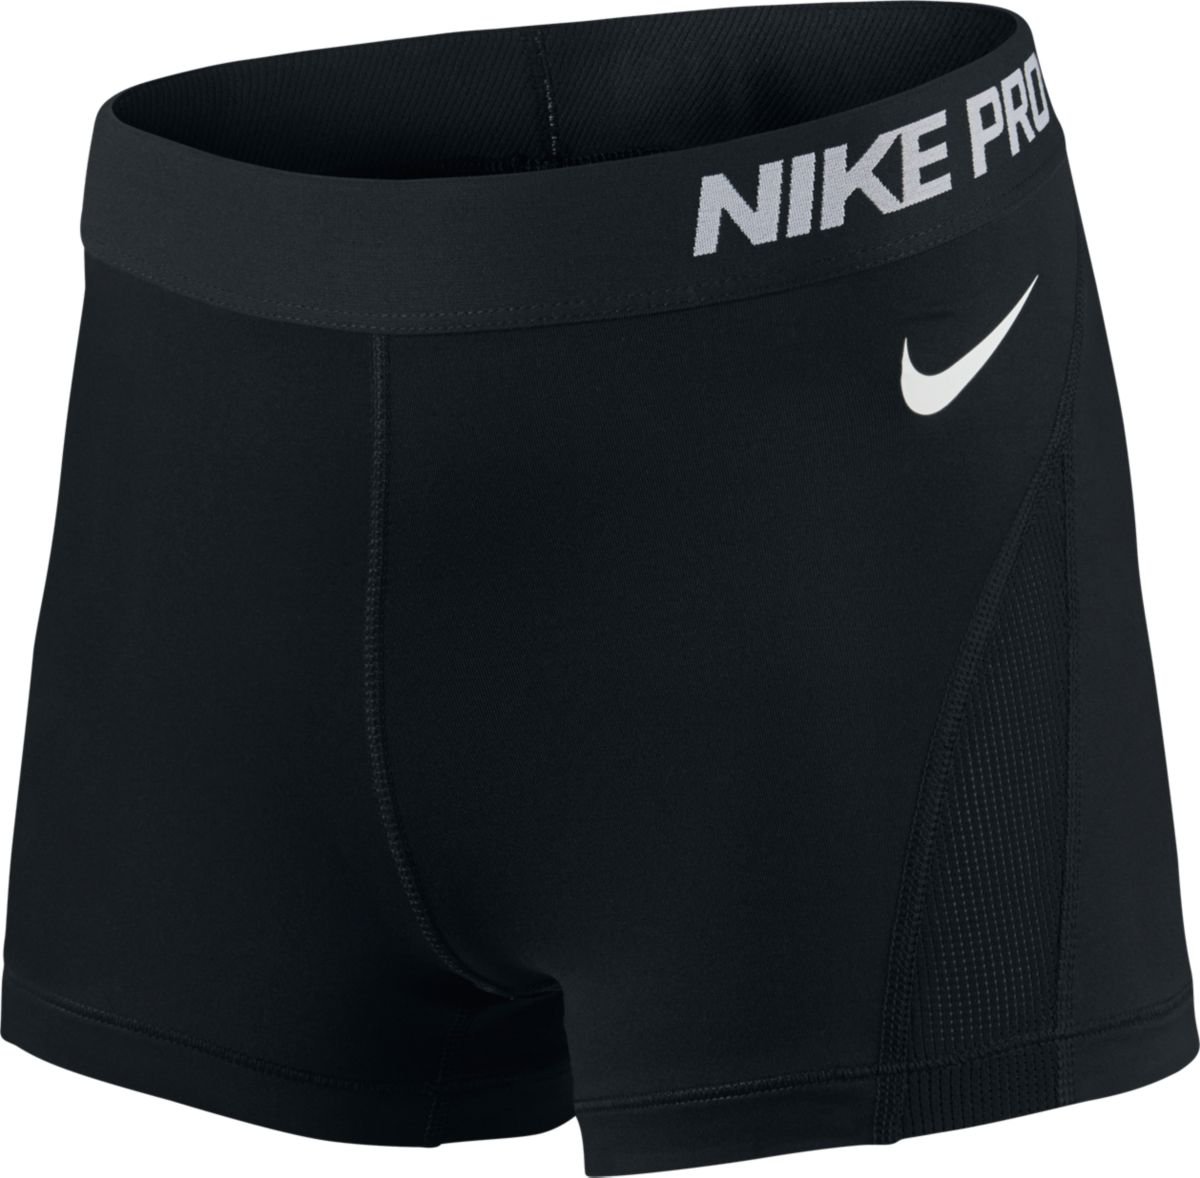 Shorts Nike PRO HYPERCOOL 3